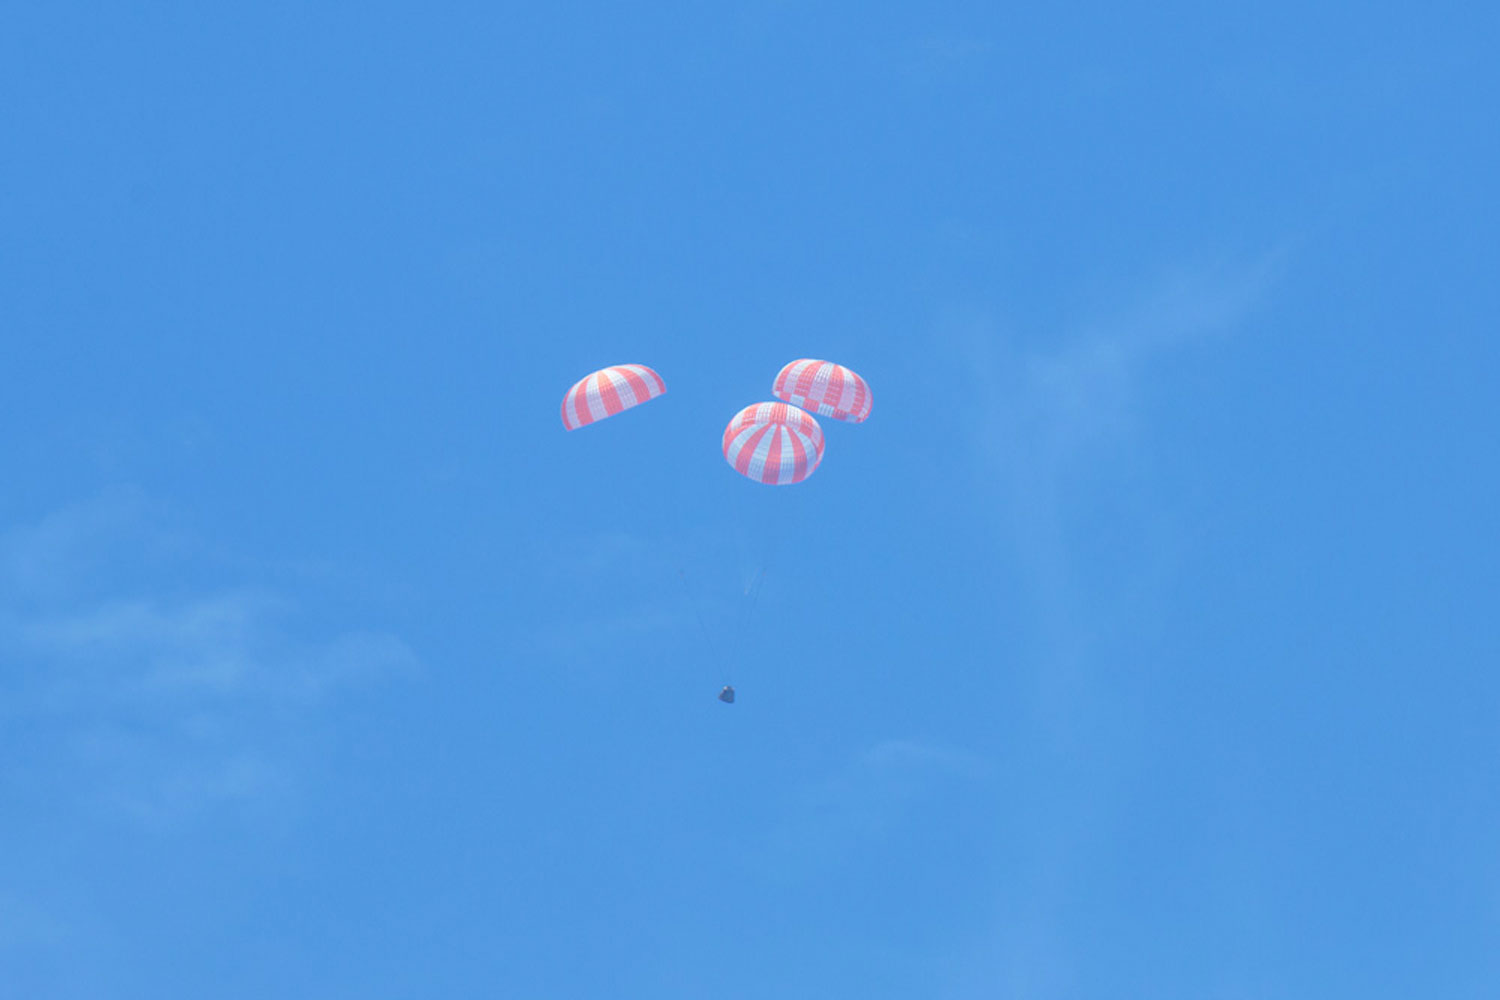 Regresa a Tierra el SpaceX Dragon